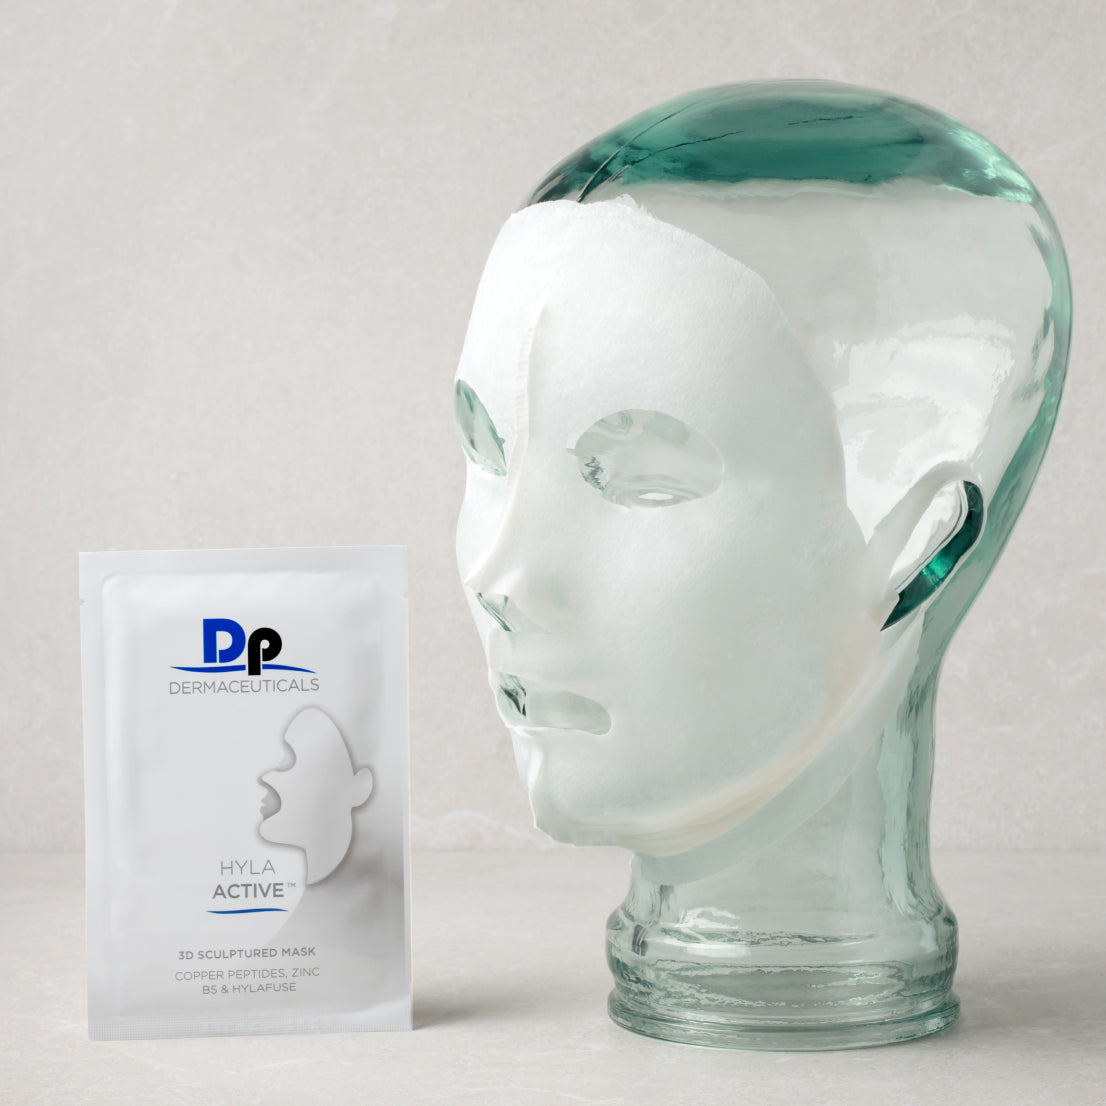 HYLA ACTIVE 3D SCULPTURED MASK – Box of 5 by Dp Dermaceuticals